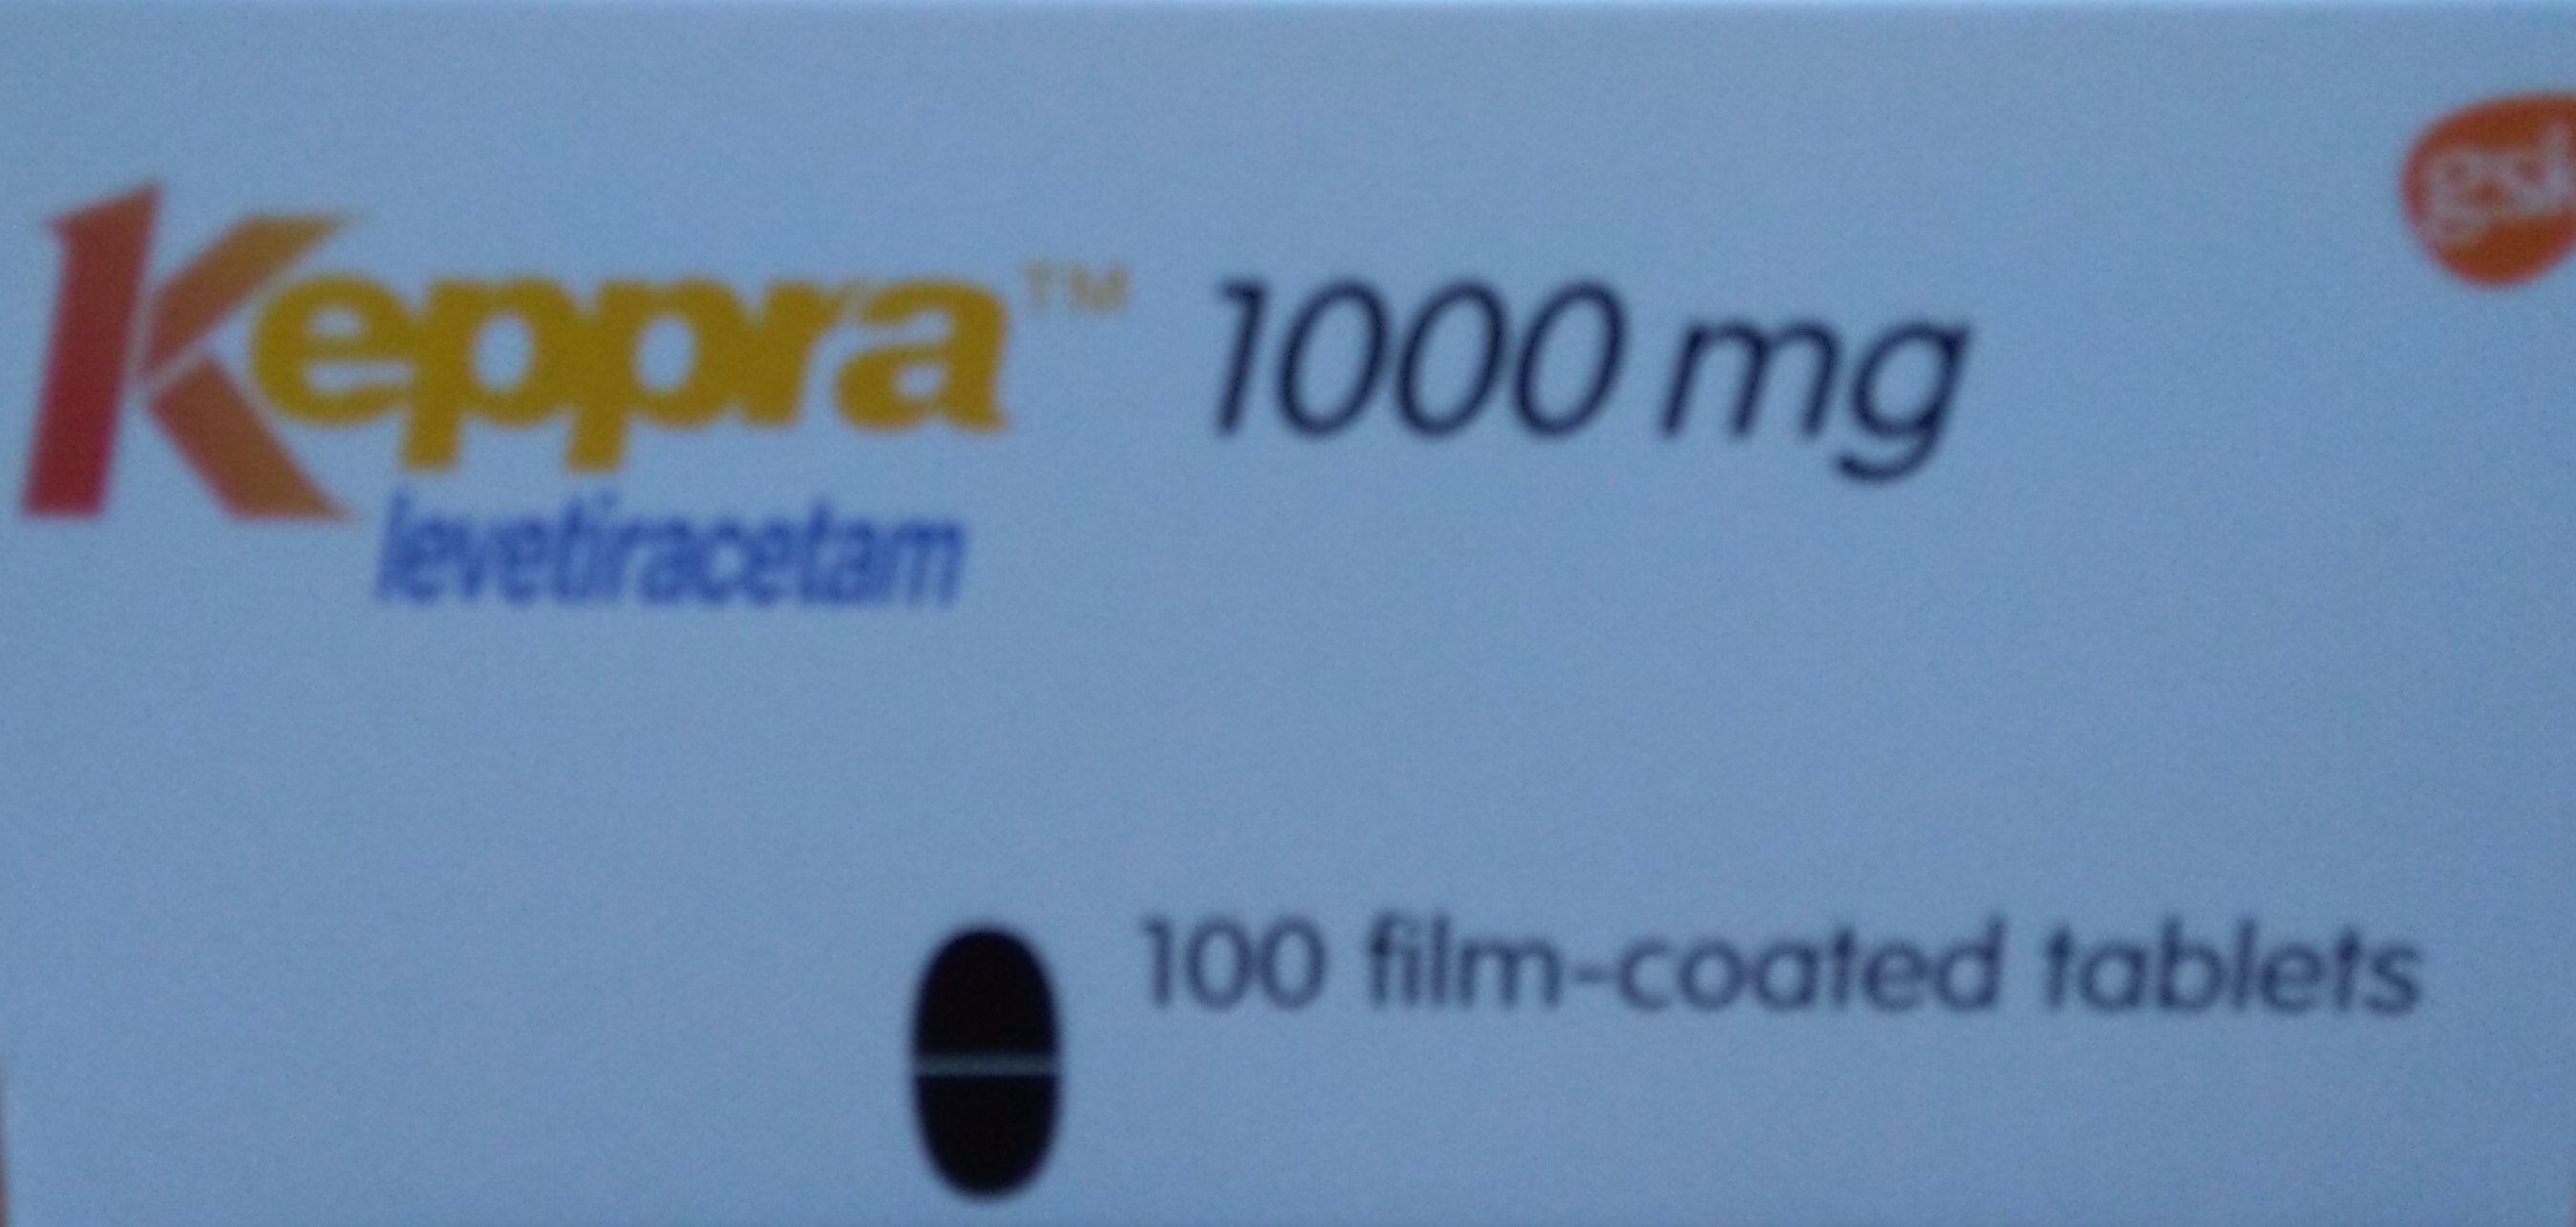 Keppra Tablets 1g